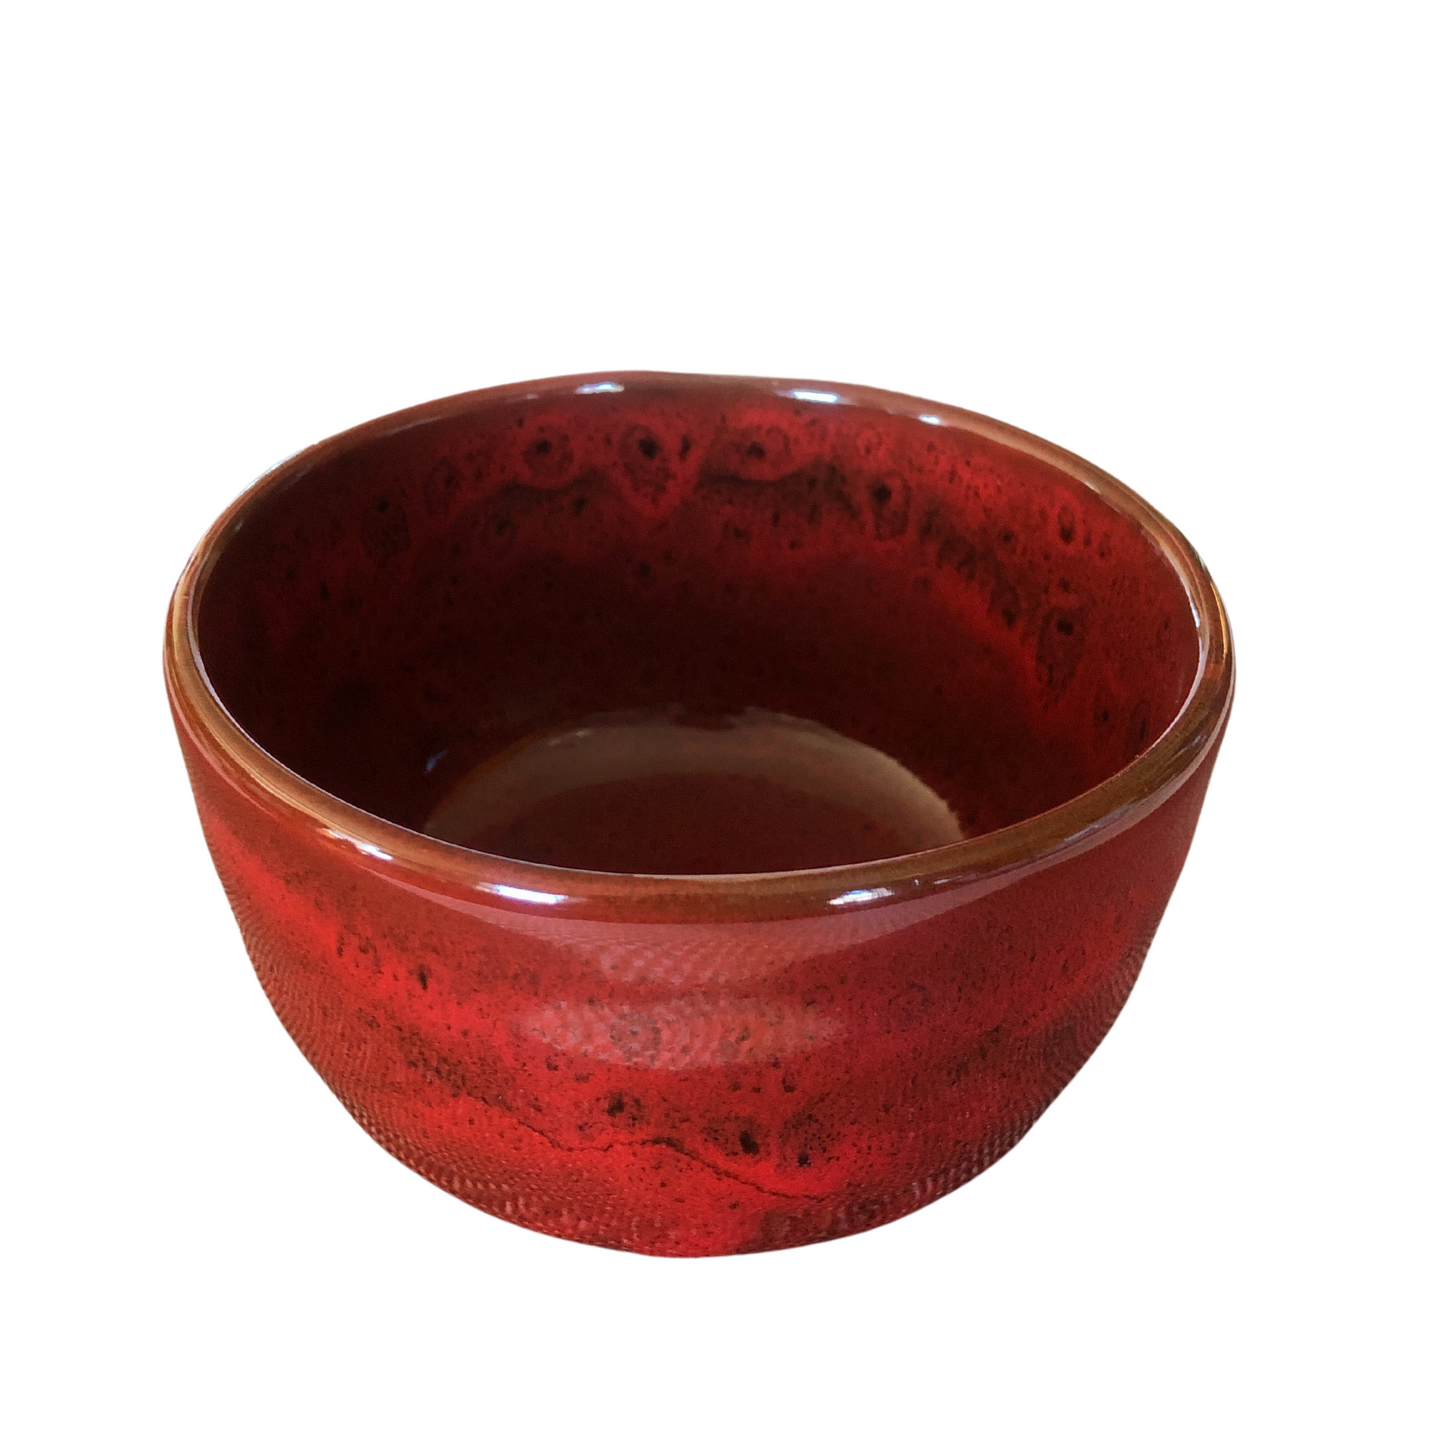 Traditional Japanese Matcha Tea Bowl